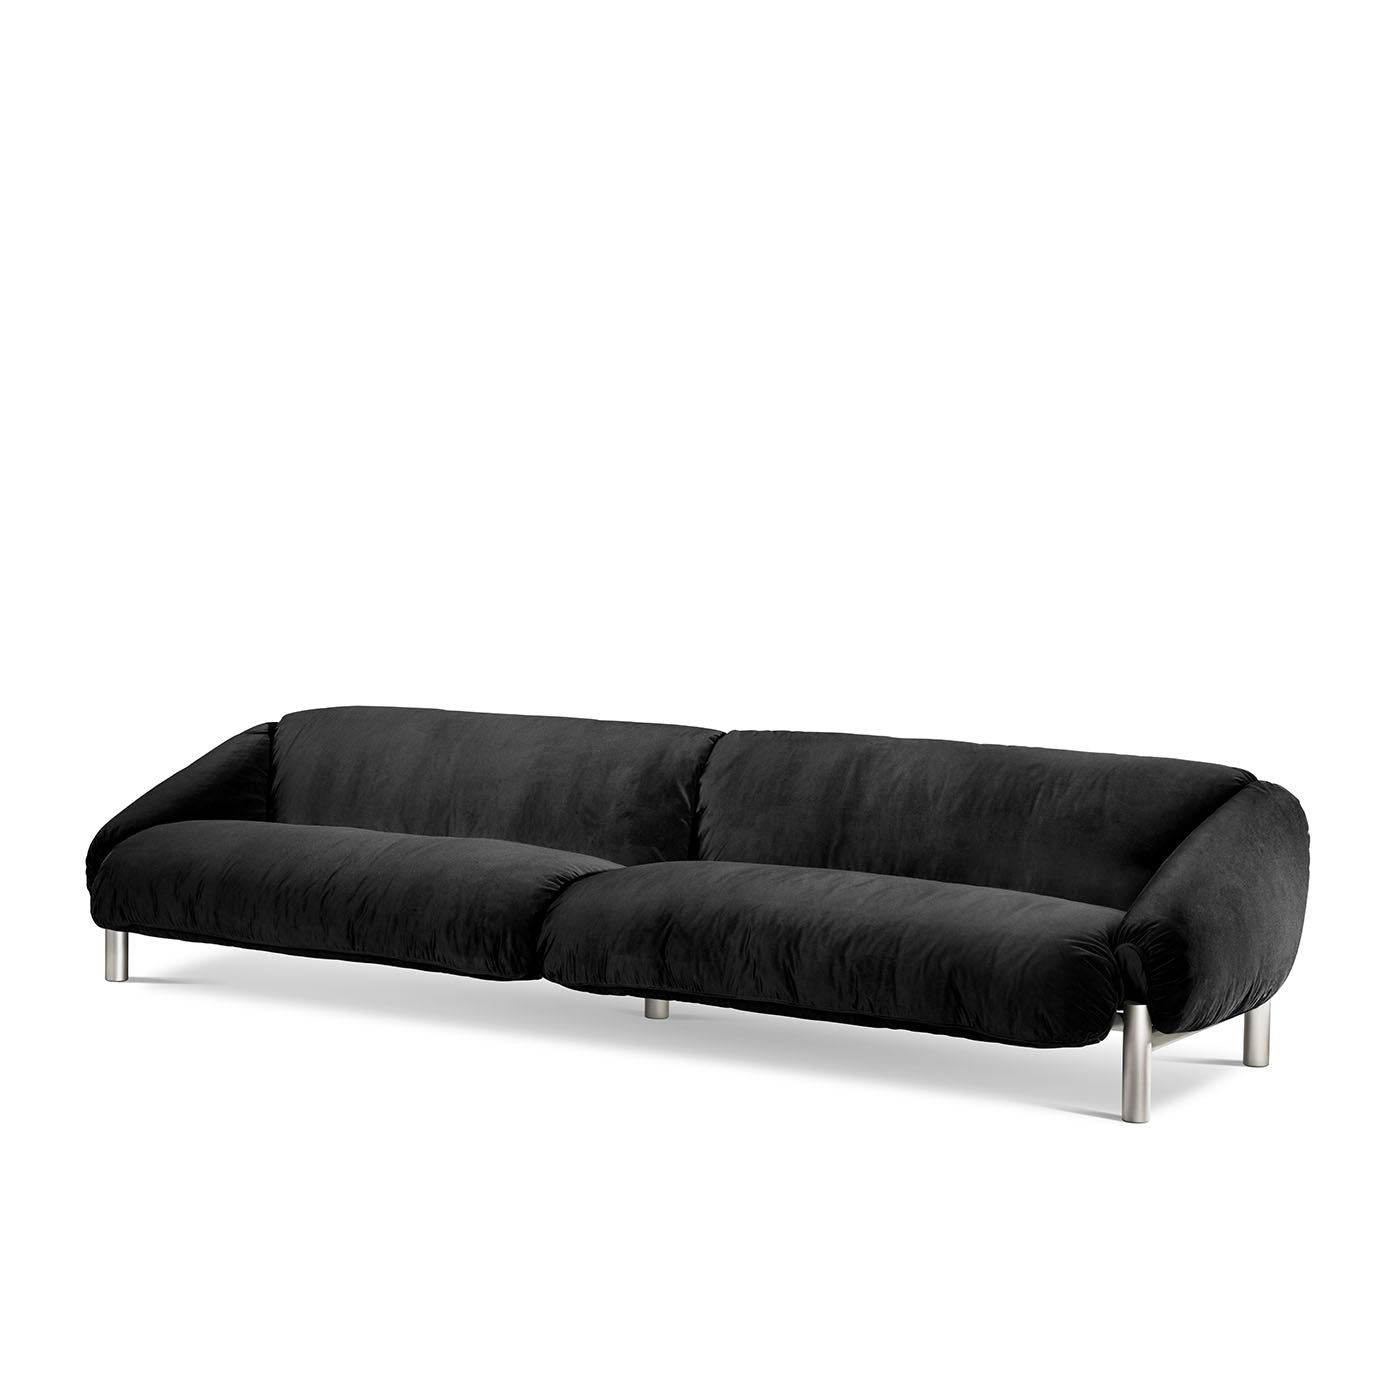 Flo 4-Seater Black Fabric Sofa by Lorenza Bozzoli - Alternative view 1